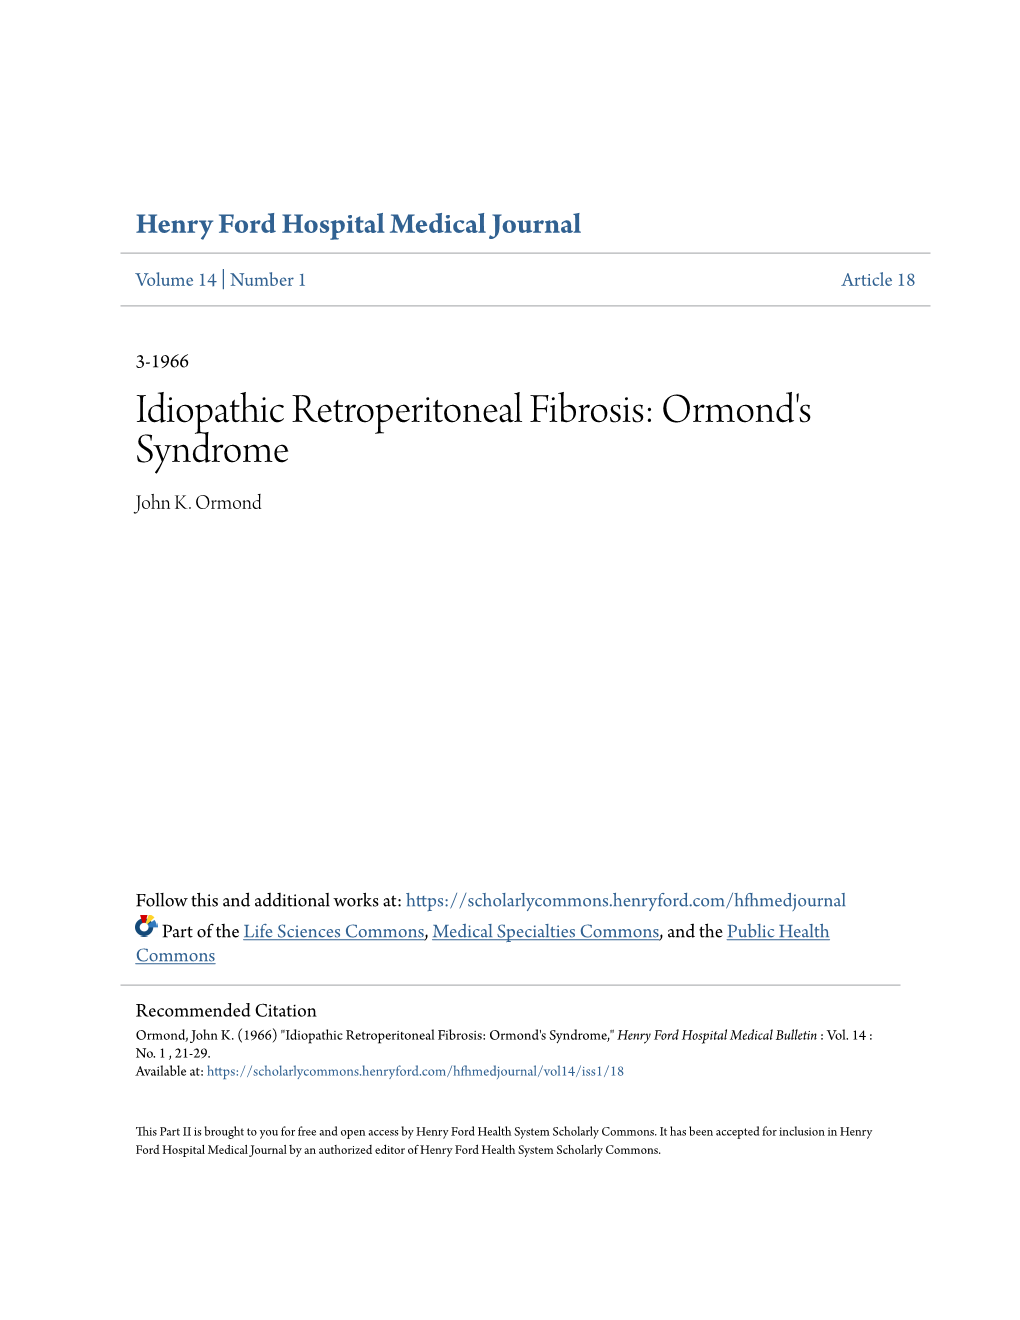 Idiopathic Retroperitoneal Fibrosis: Ormond's Syndrome John K